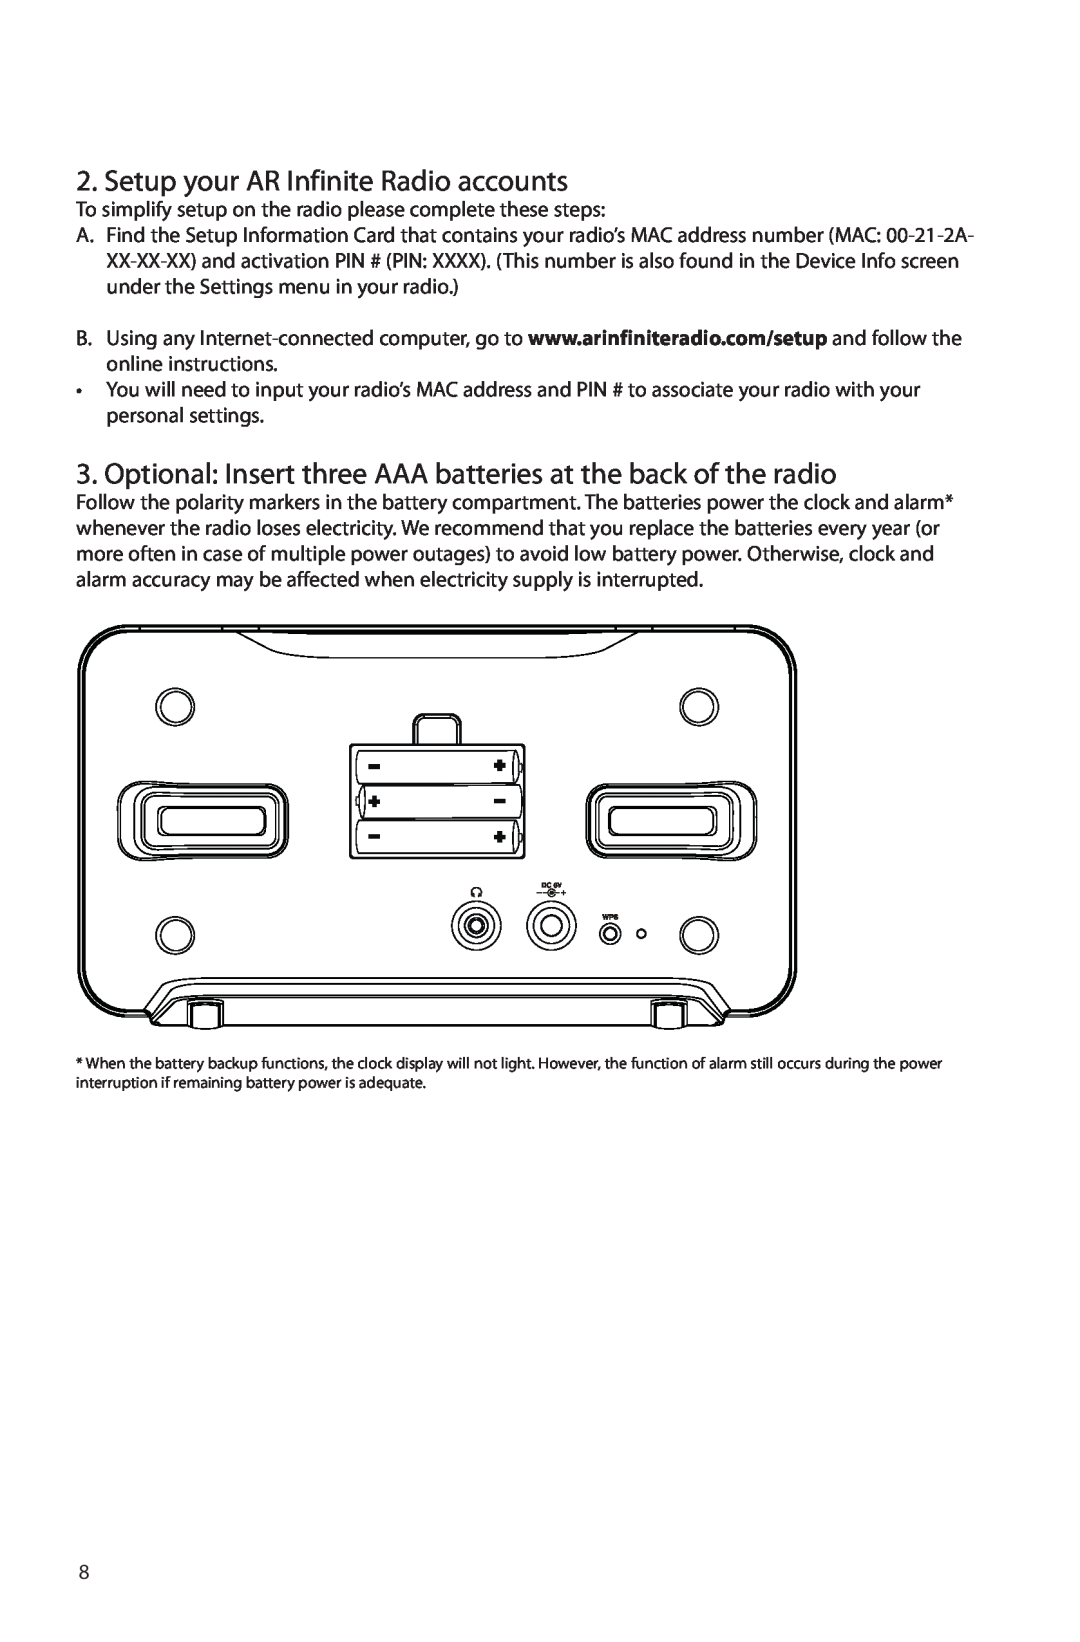 Acoustic Research ARIR150 user manual Setup your AR Infinite Radio accounts 